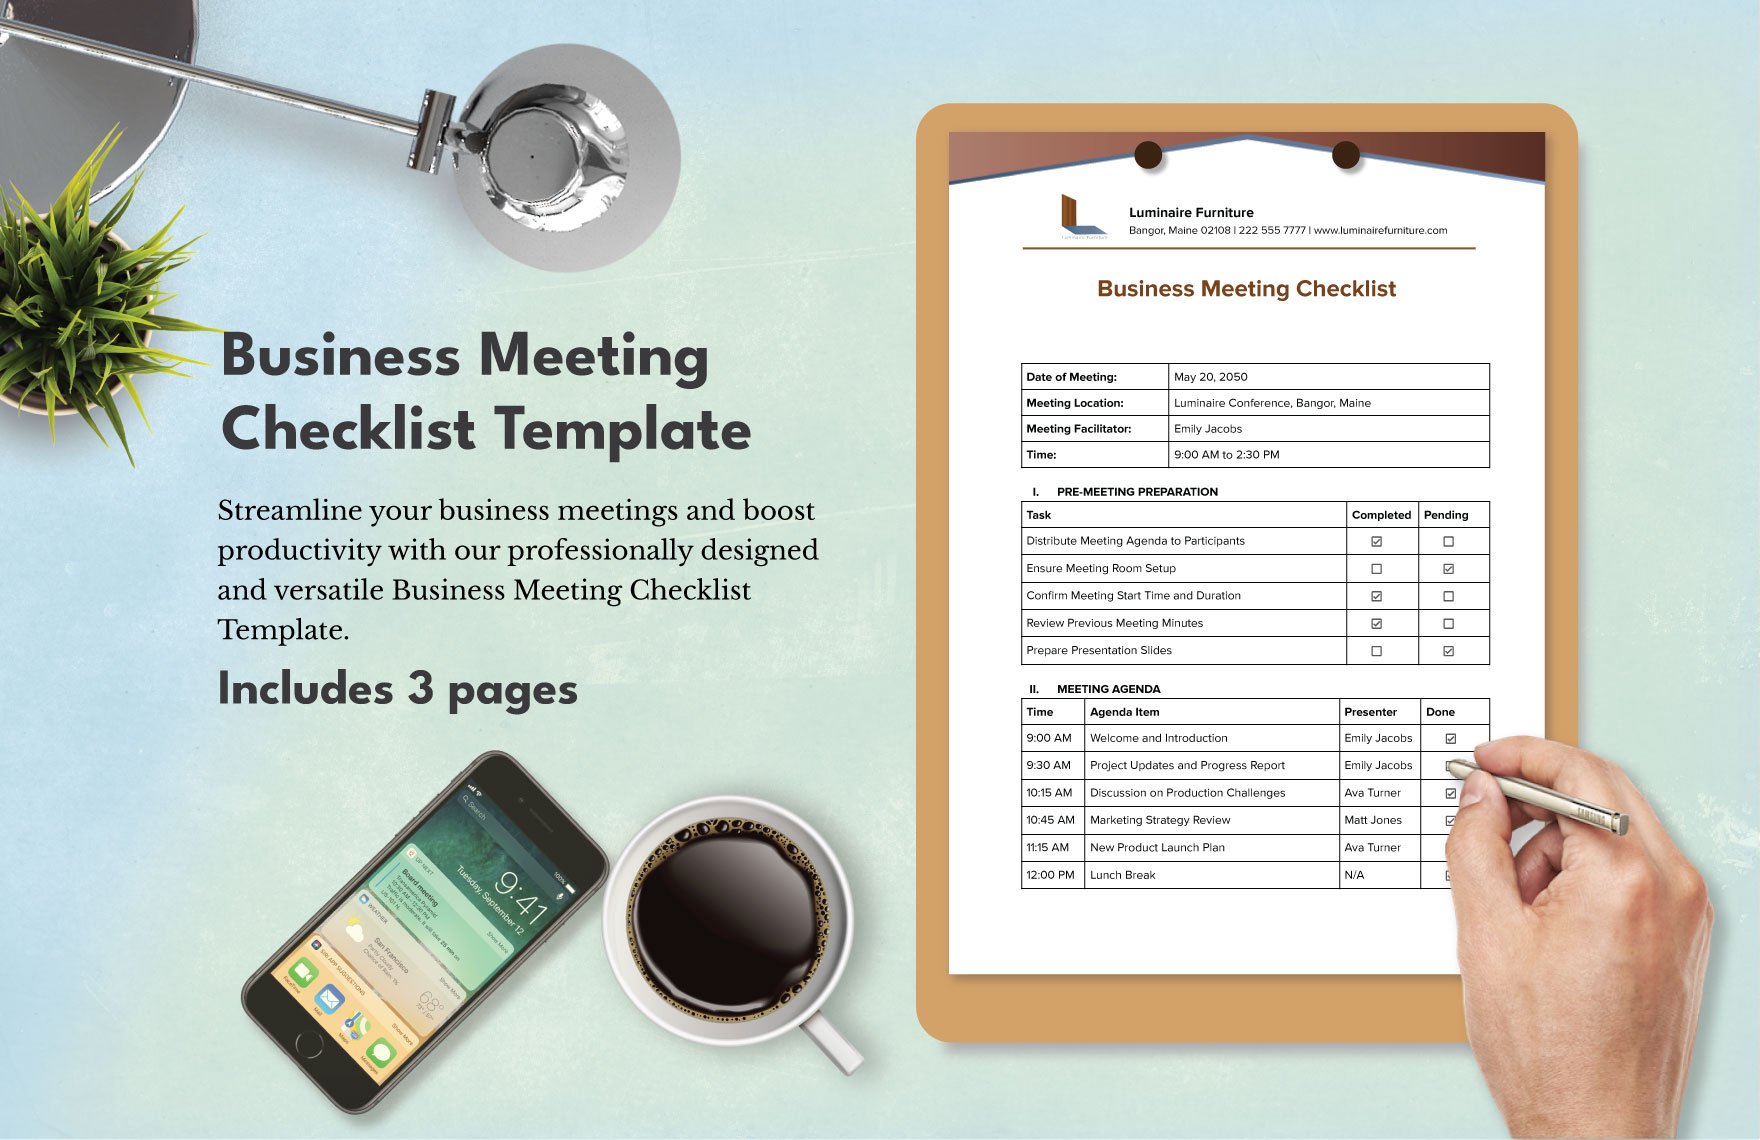 Business Meeting Checklist Template